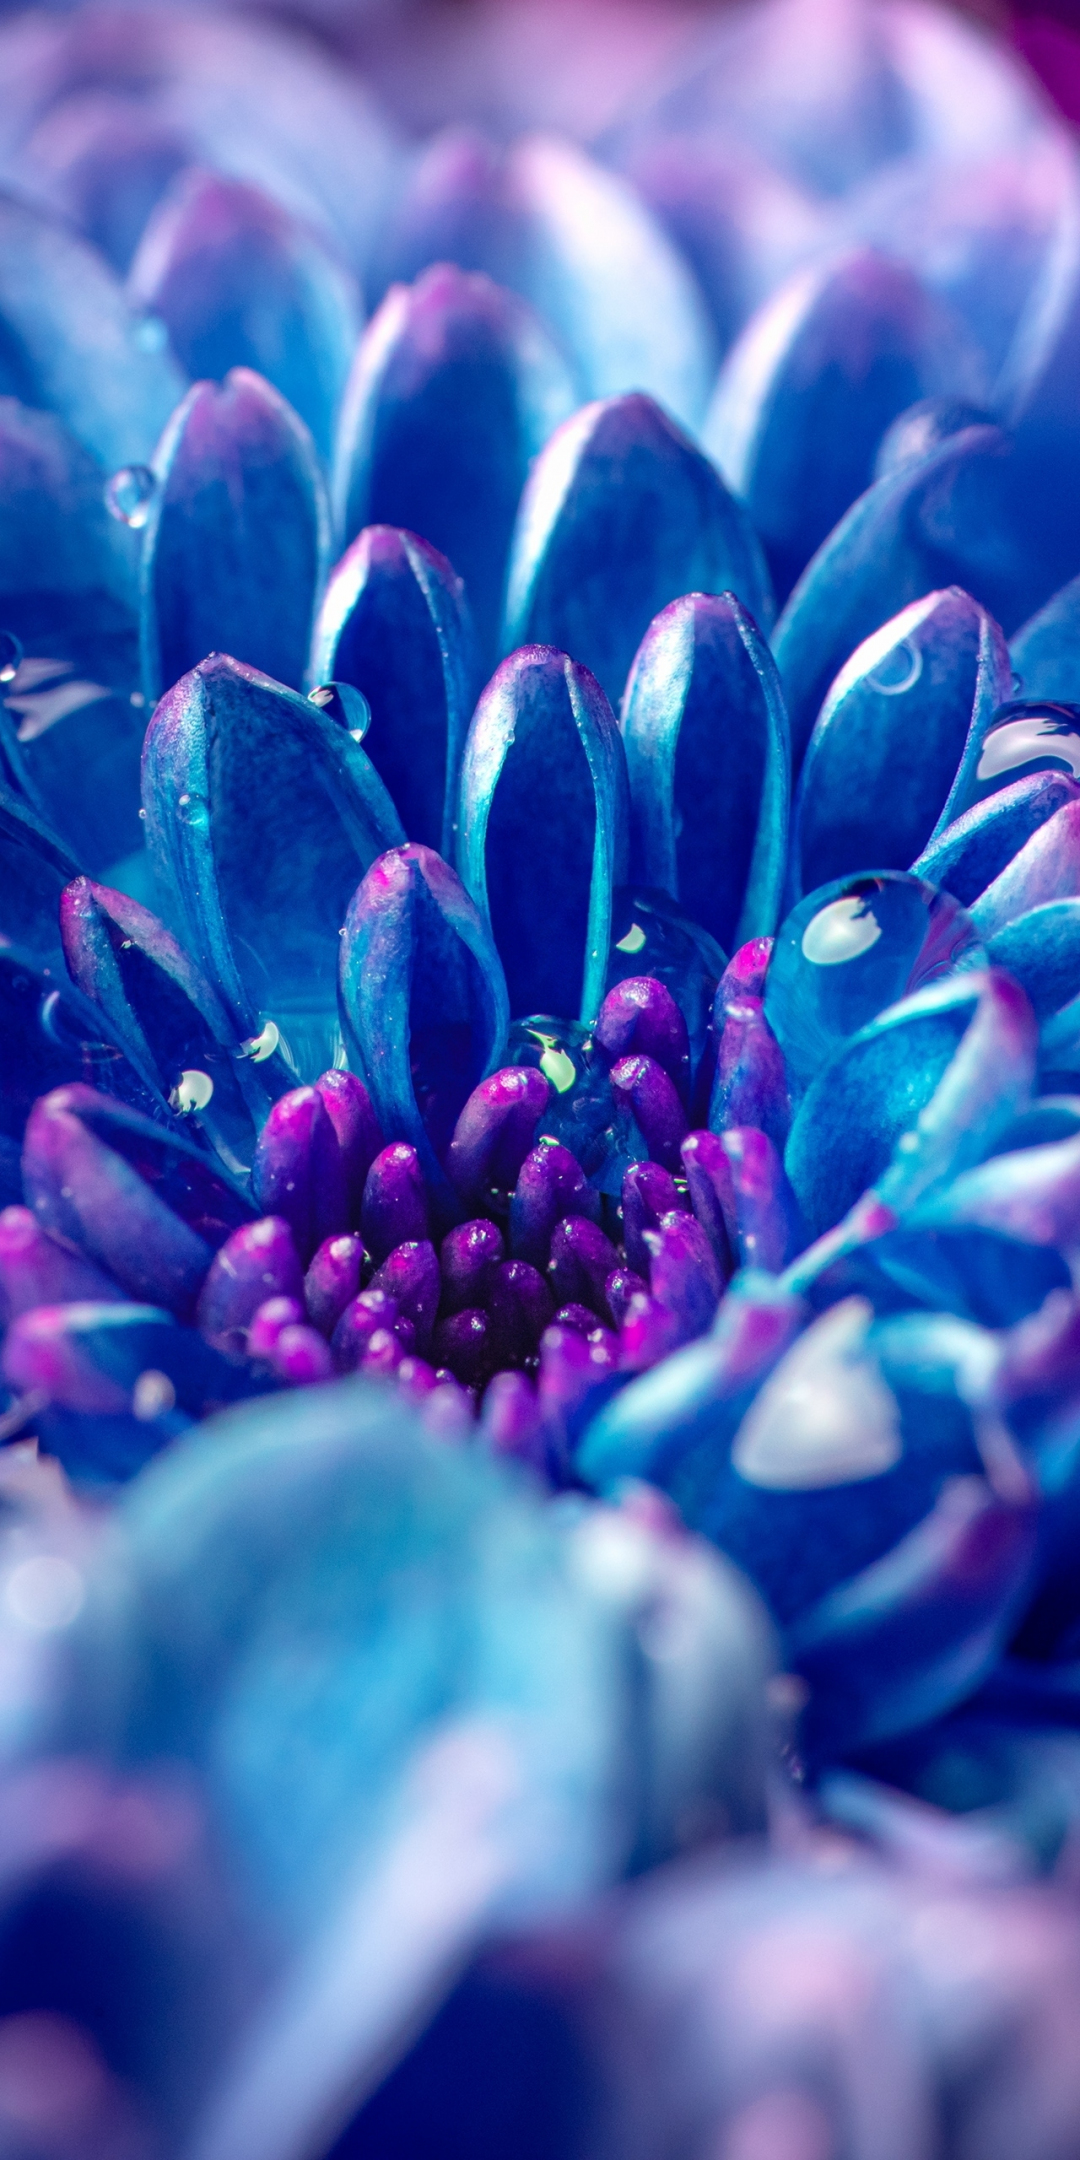 Blue flower, Dahlia, close-up, 1080x2160 wallpaper